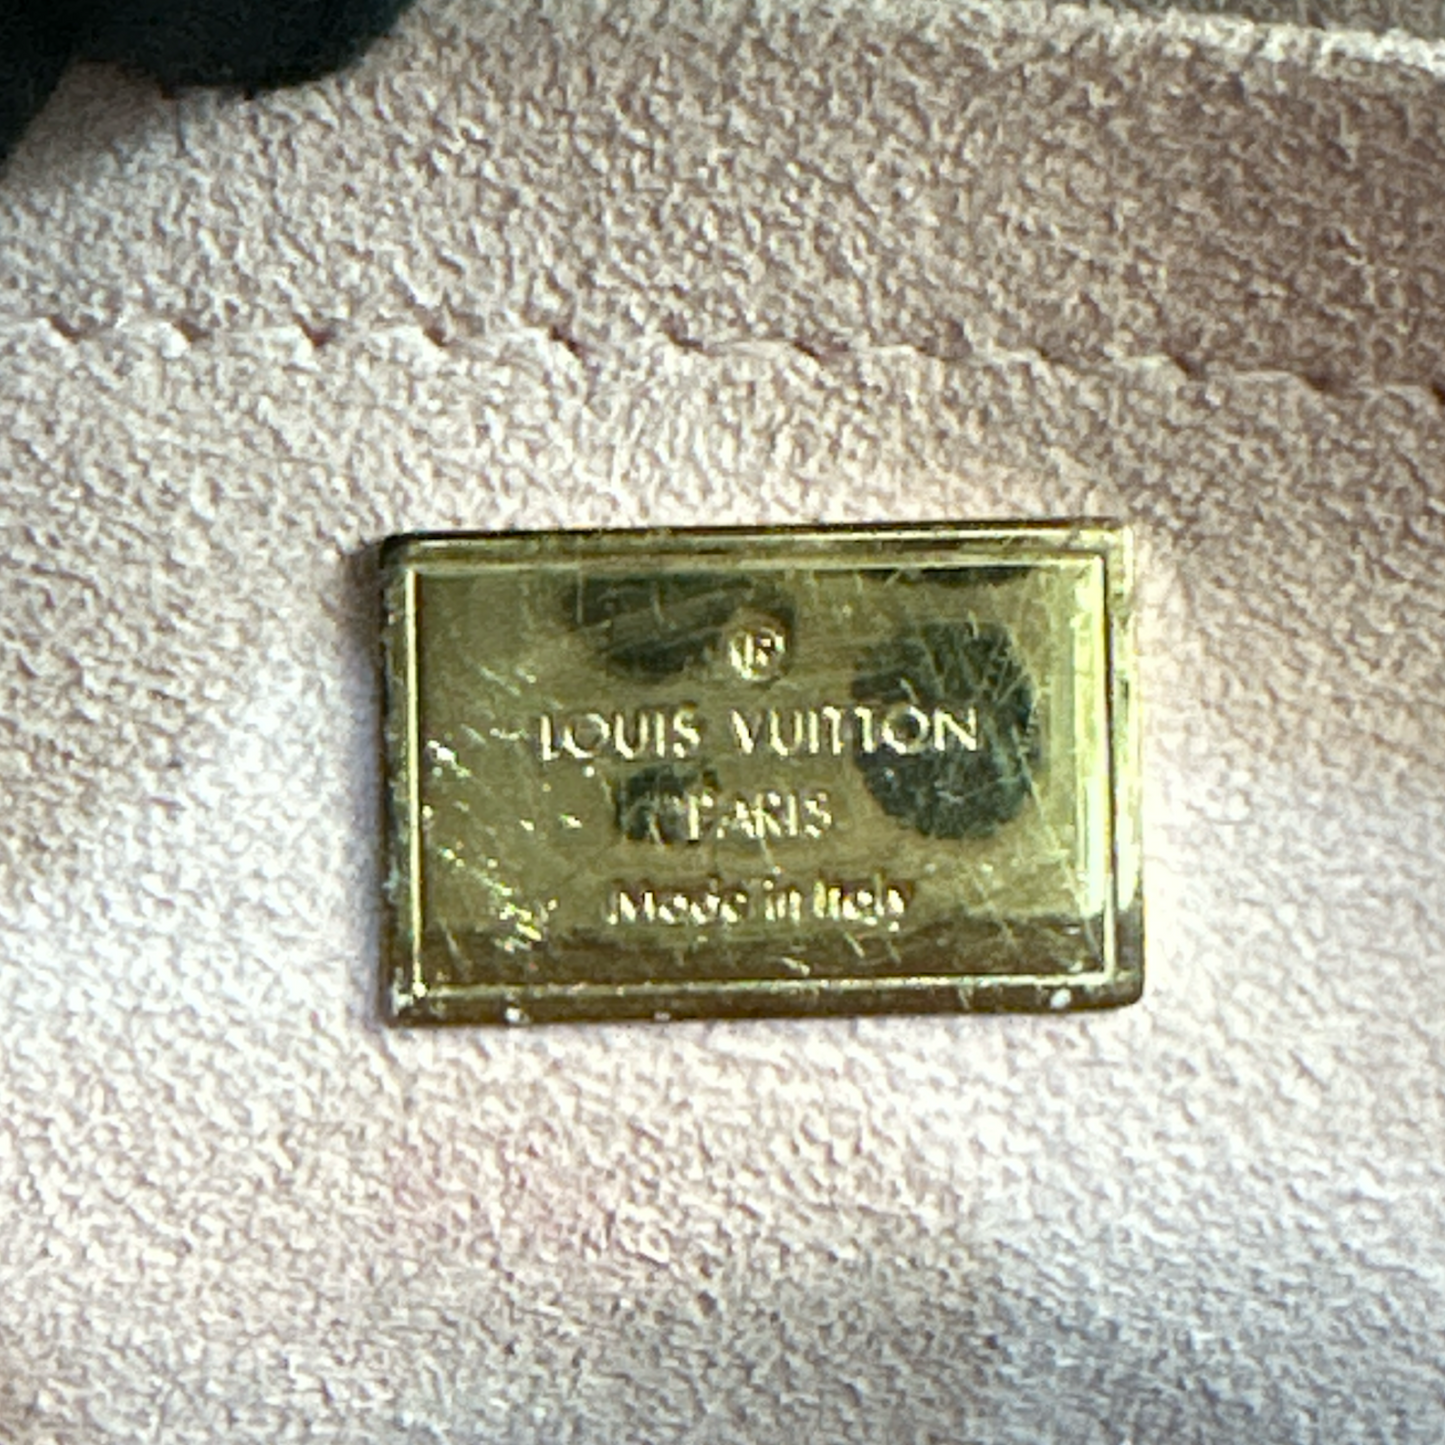 Louis Vuitton Spring Street